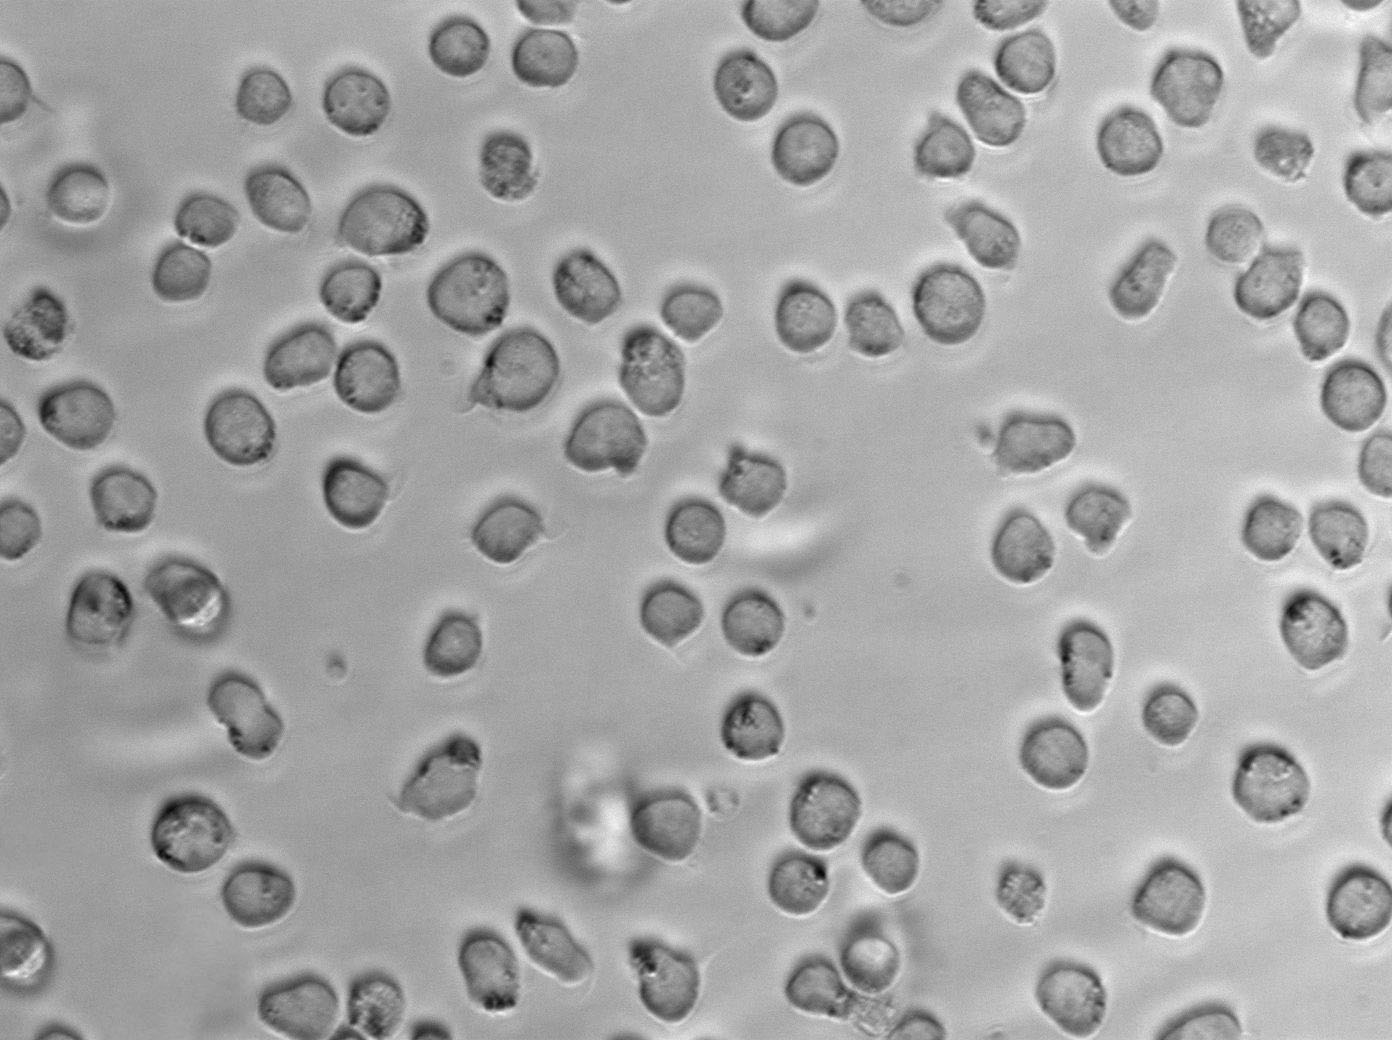 Z-138 Cell|人套细胞淋巴瘤细胞,Z-138 Cell